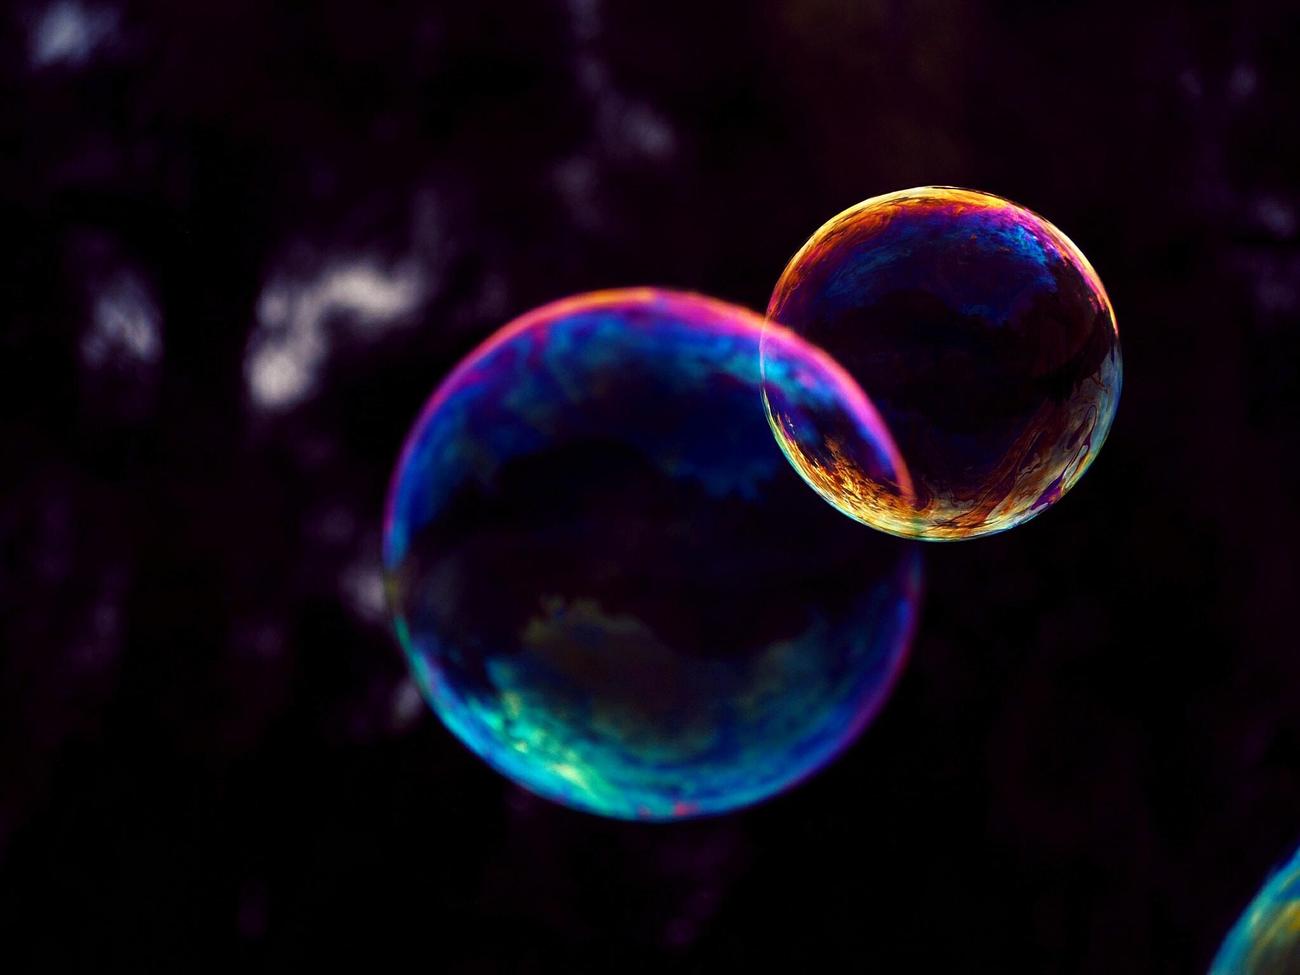 Unique characteristics of bubbles featured